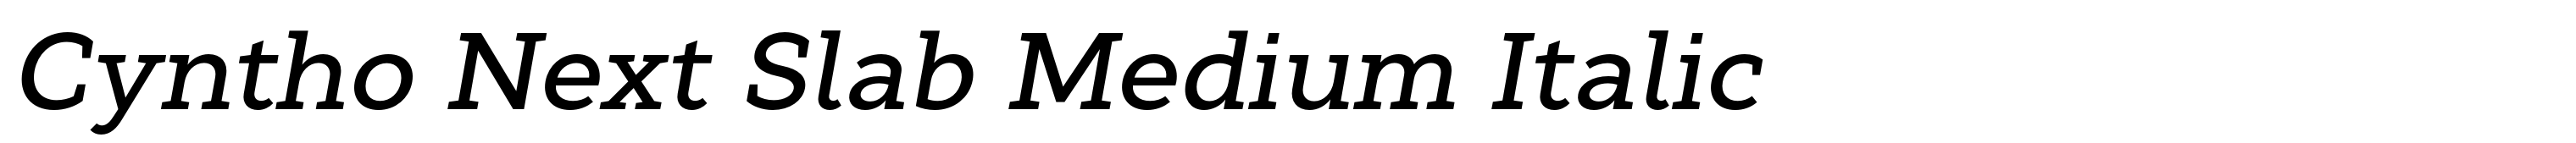 Cyntho Next Slab Medium Italic